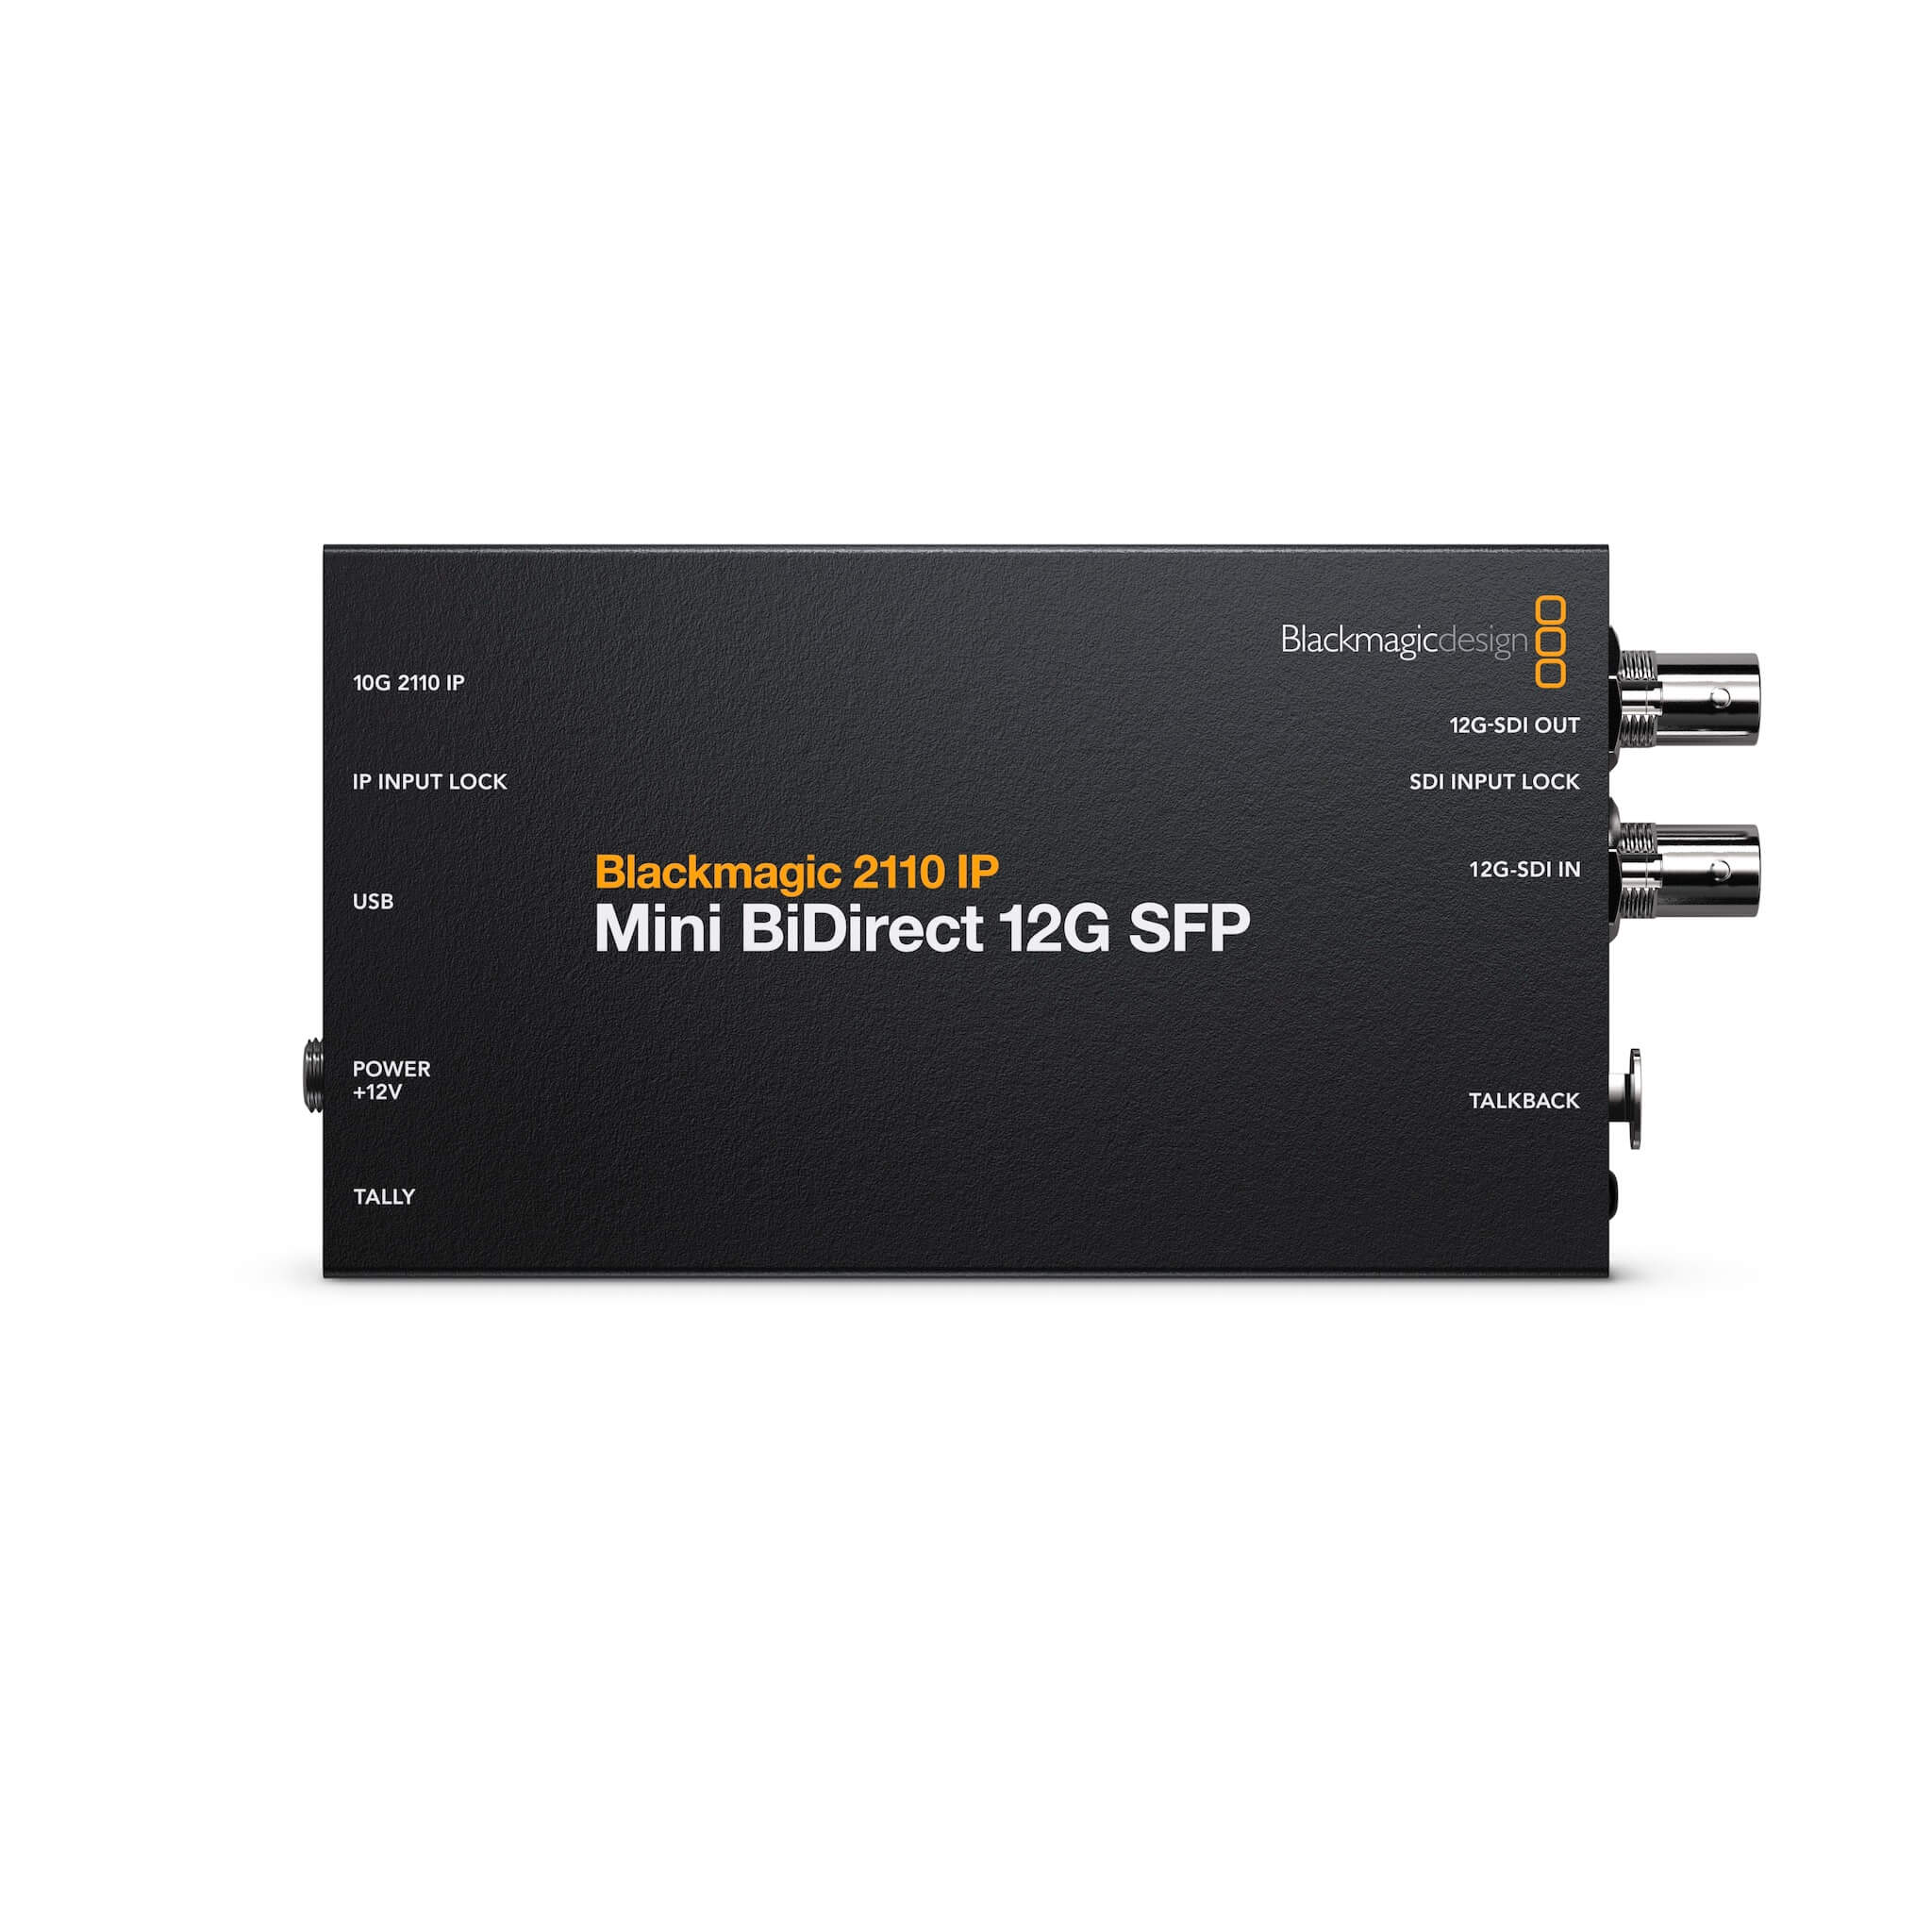 Blackmagic Design 2110 IP Mini BiDirect 12G SFP, top